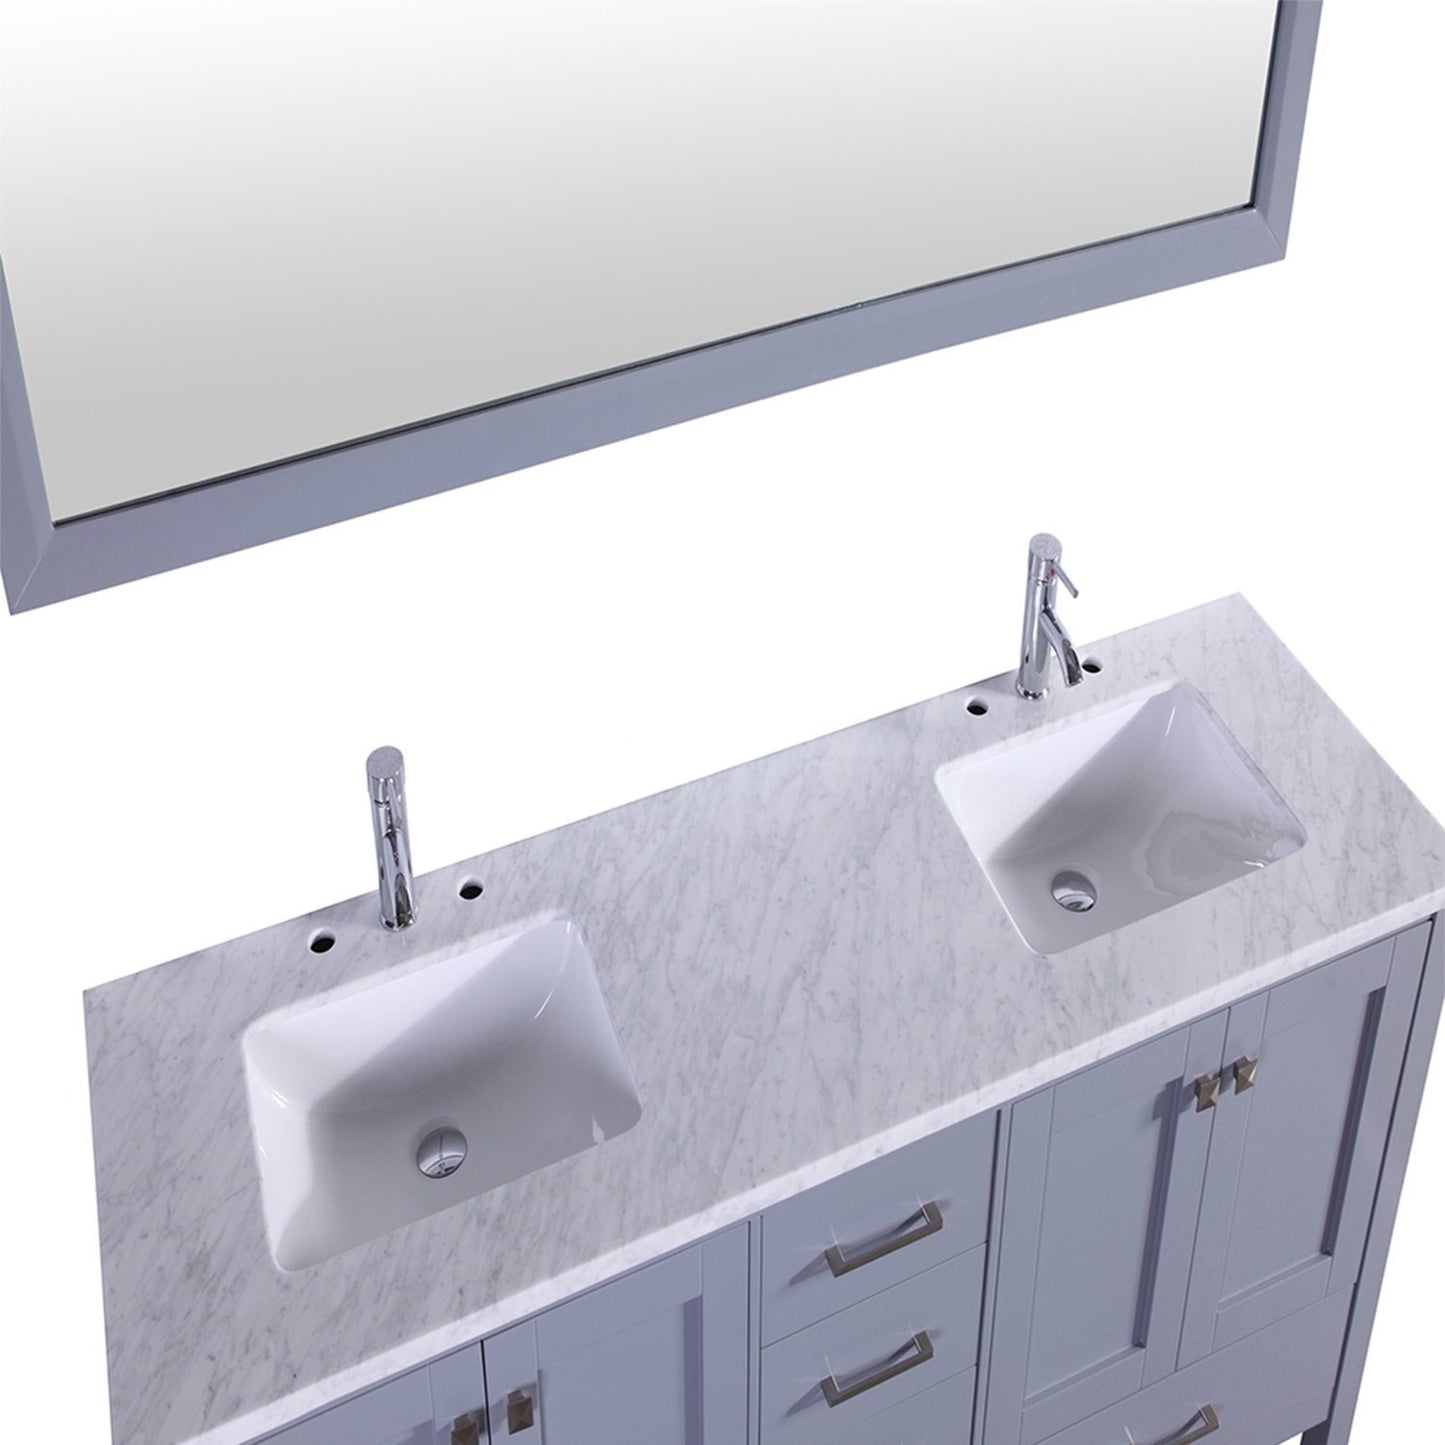 Totti Shaker 60" Transitional Bathroom Vanity with White Carrera Countertop - Luxe Bathroom Vanities Luxury Bathroom Fixtures Bathroom Furniture